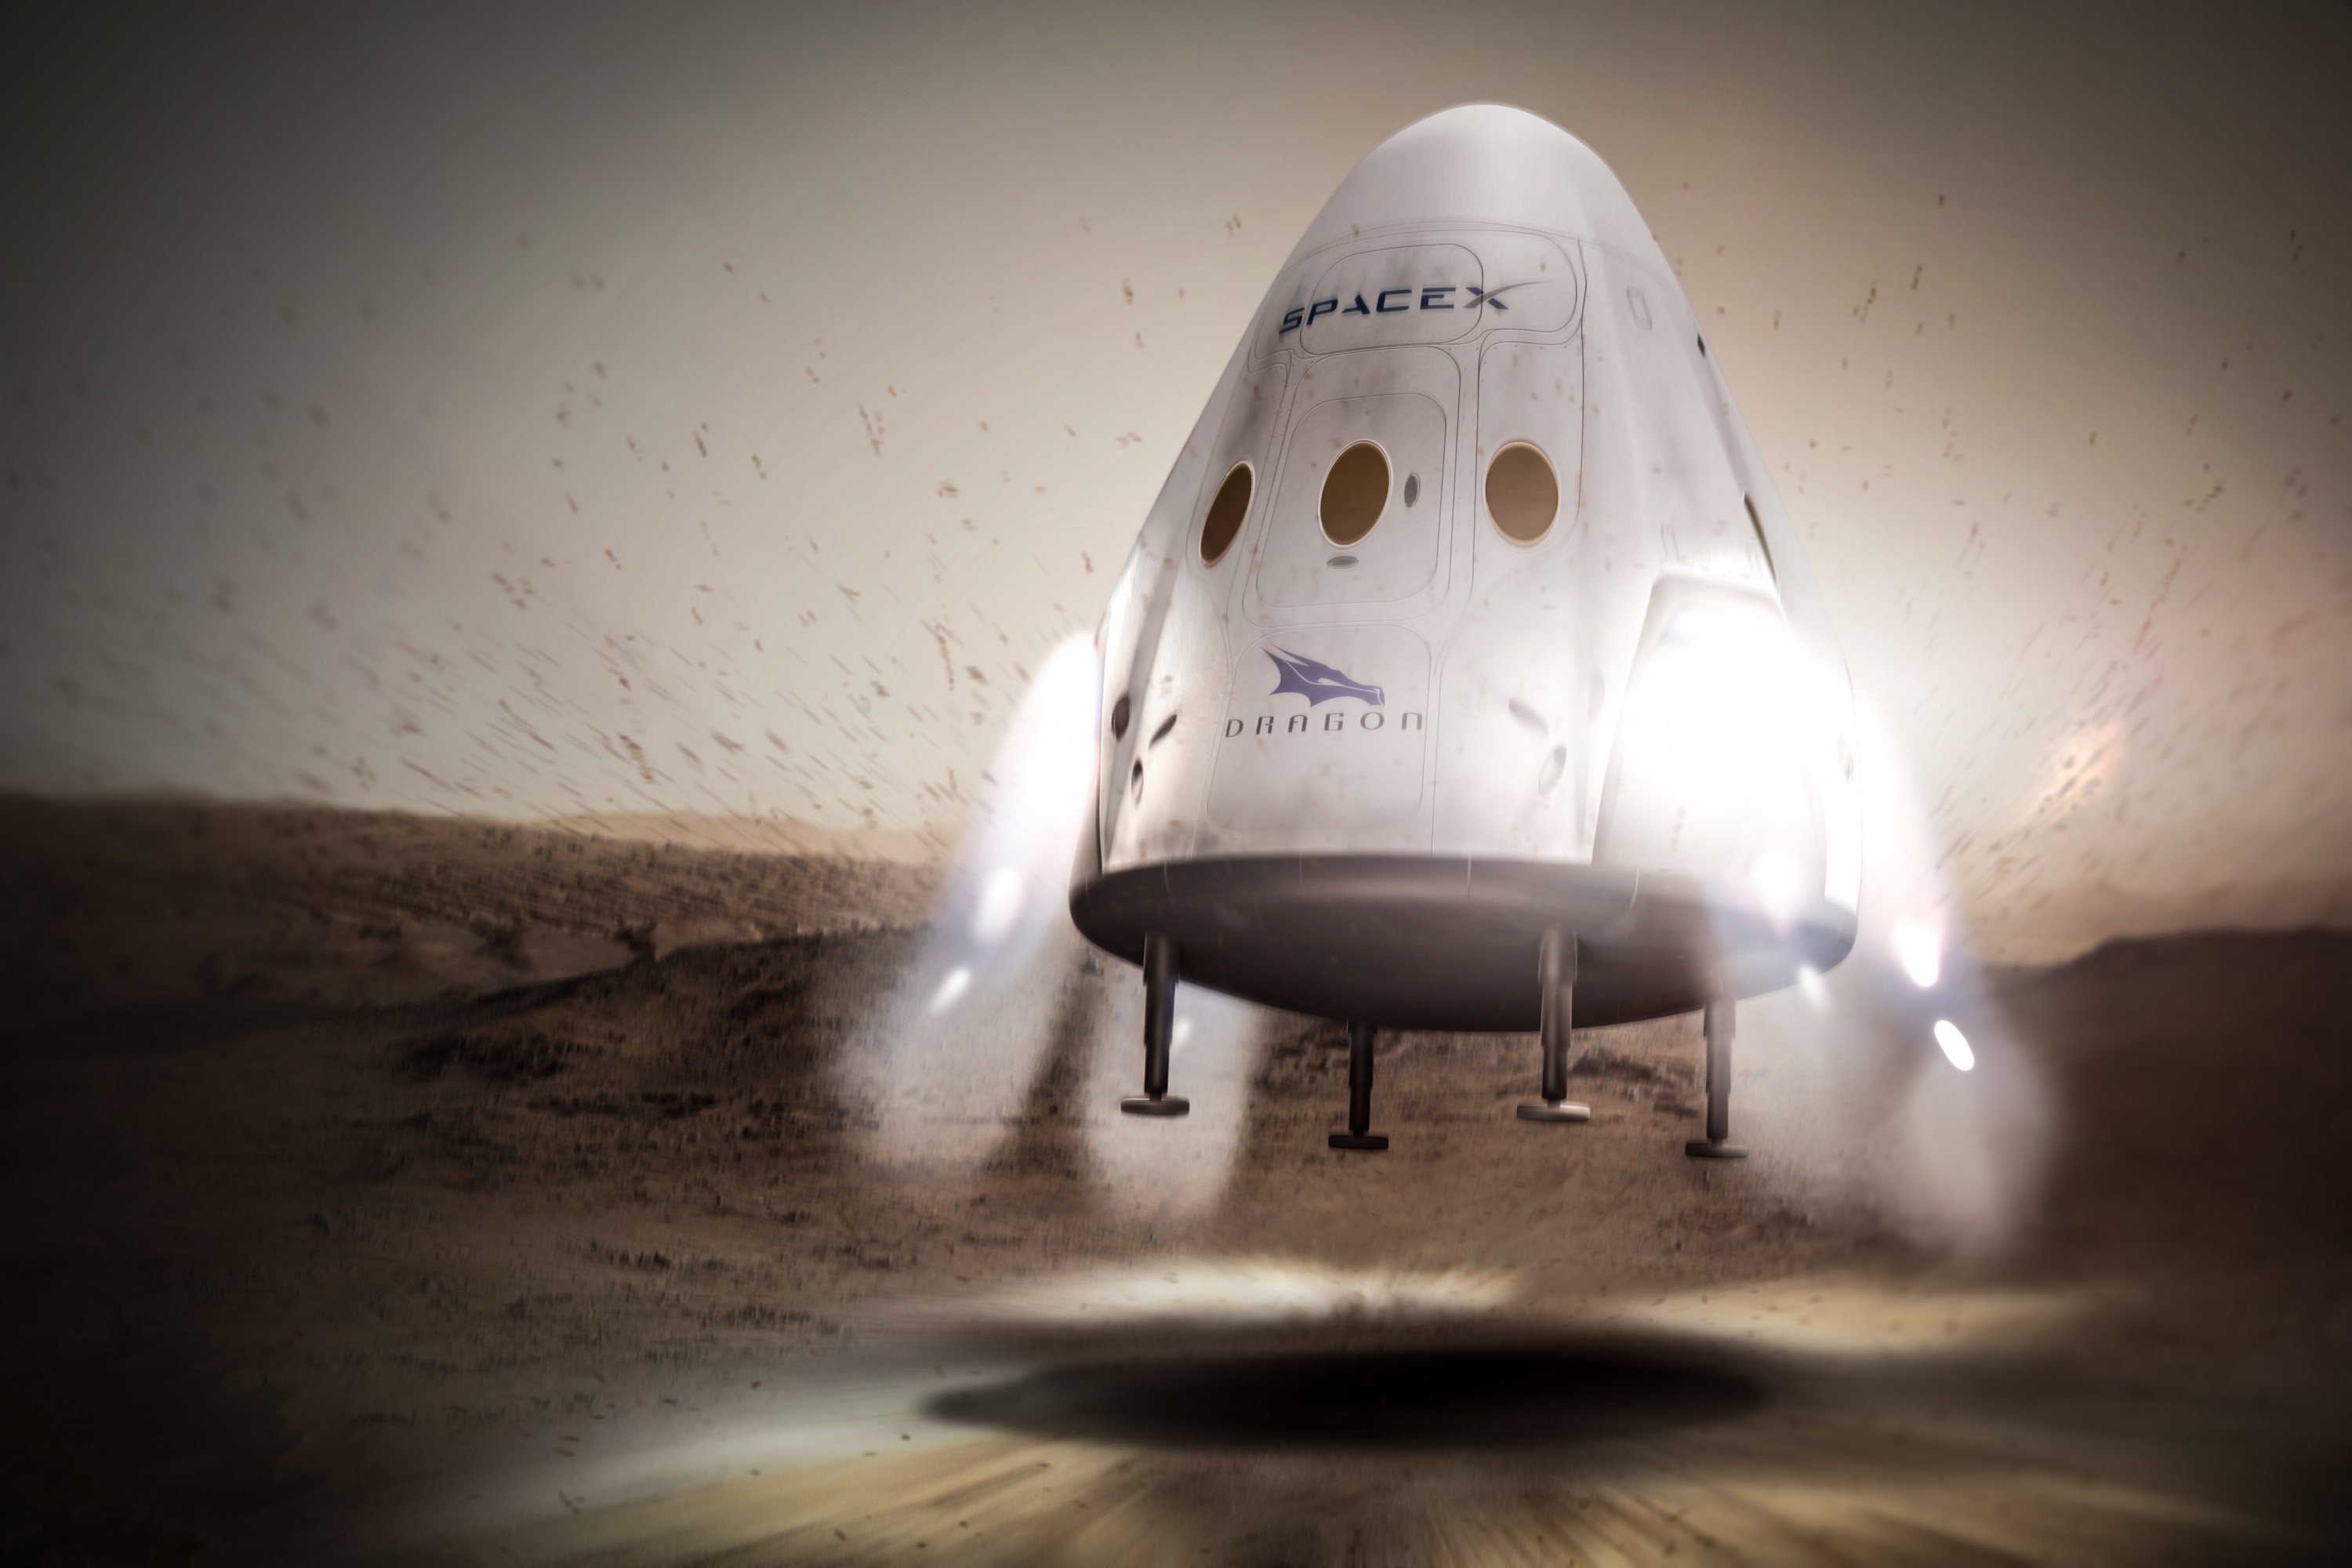 SpaceX отказ от реактивной посадки Dragon 2 риск недолета Falcon Heavy до орбиты и повторные запуски за 24 часа в 2018 году